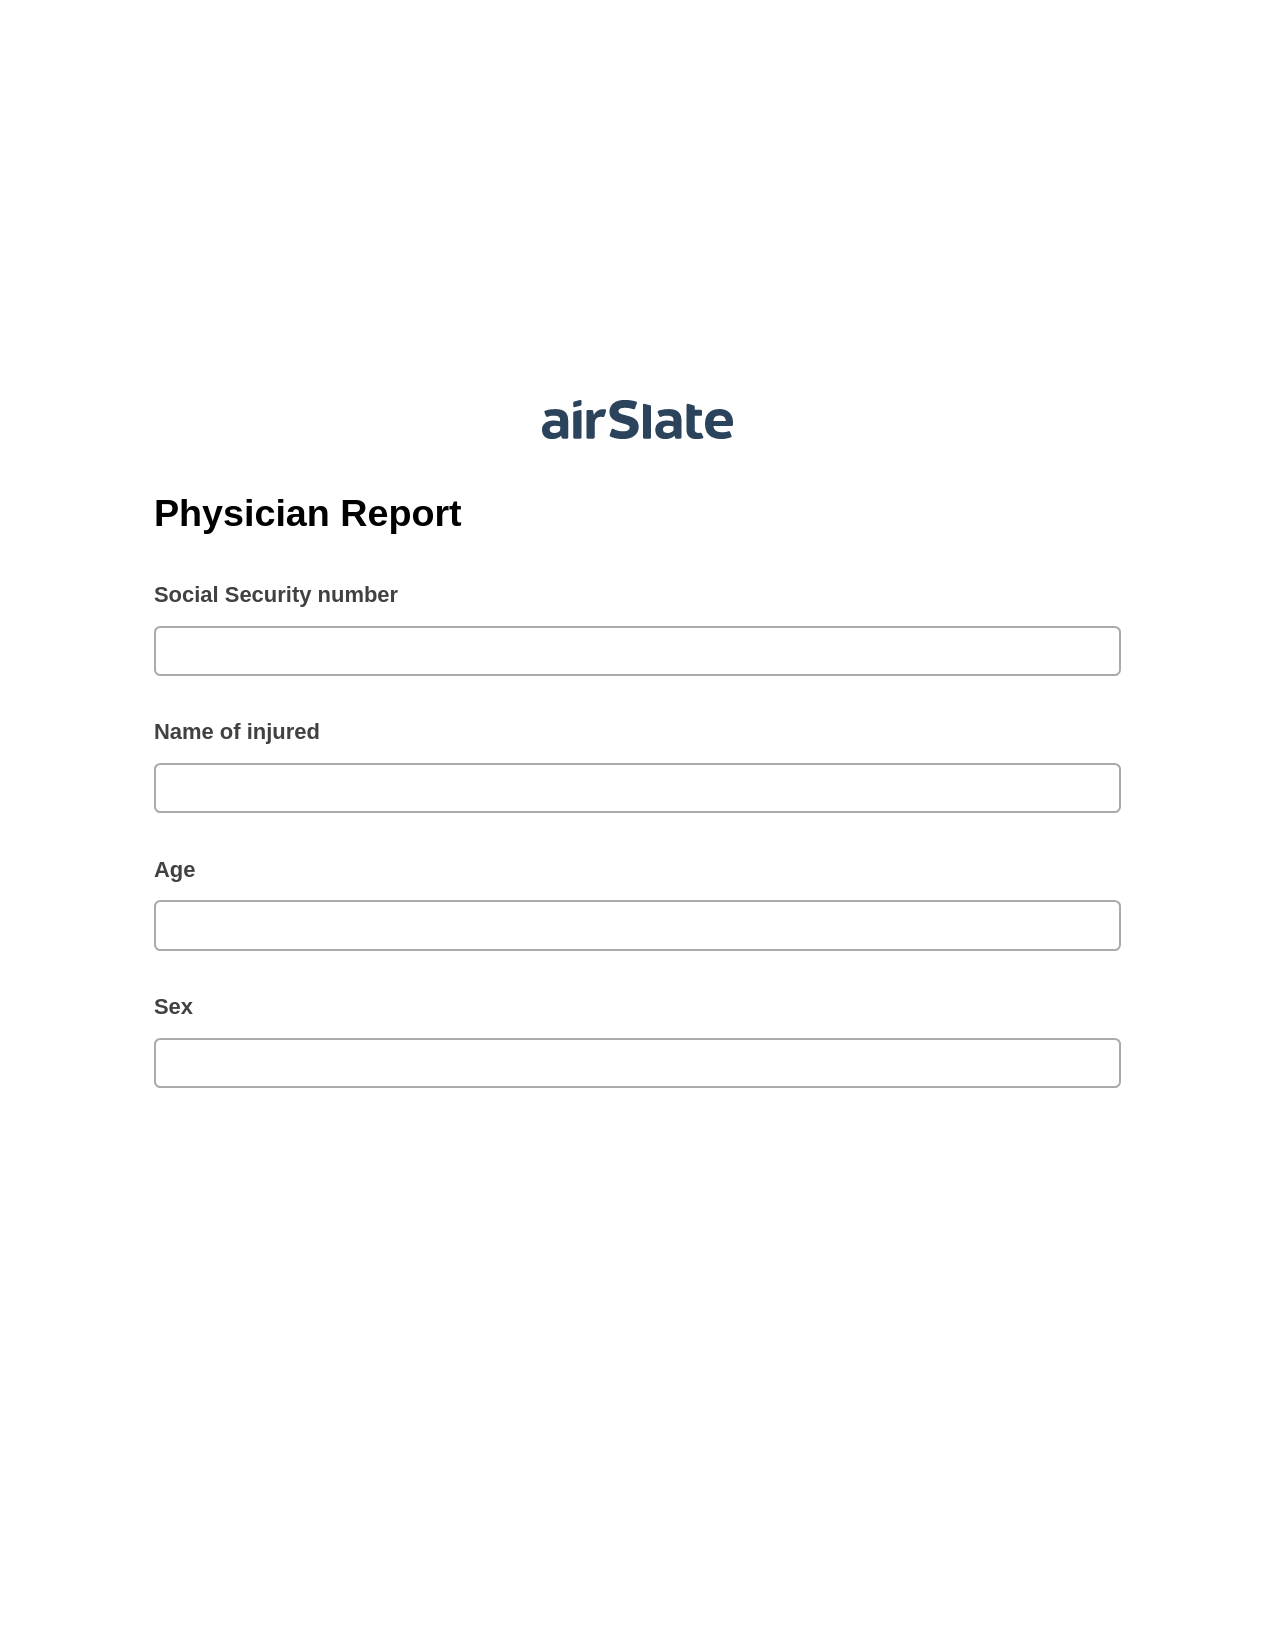 Physician Report Pre-fill from Excel Spreadsheet Bot, Google Calendar Bot, Post-finish Document Bot